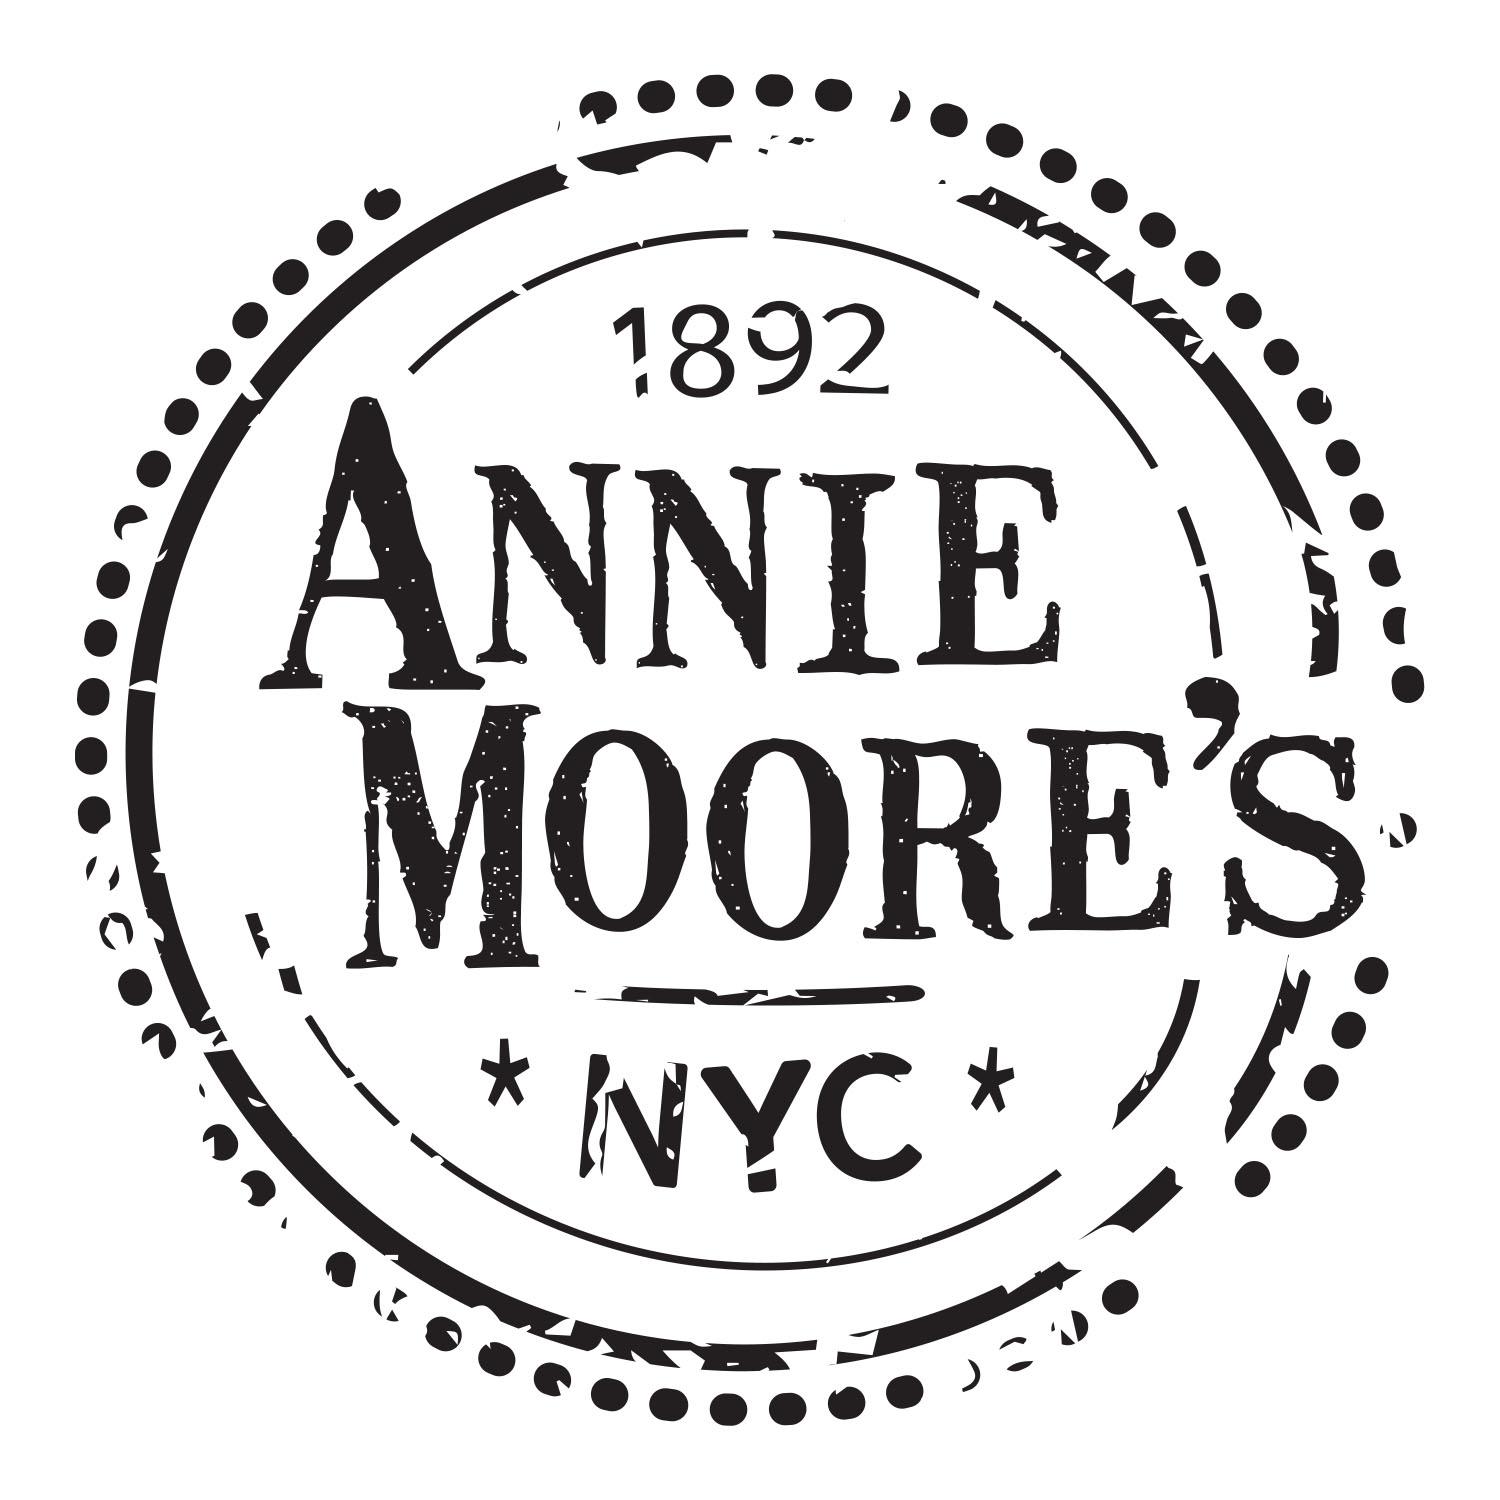 Annie Moores